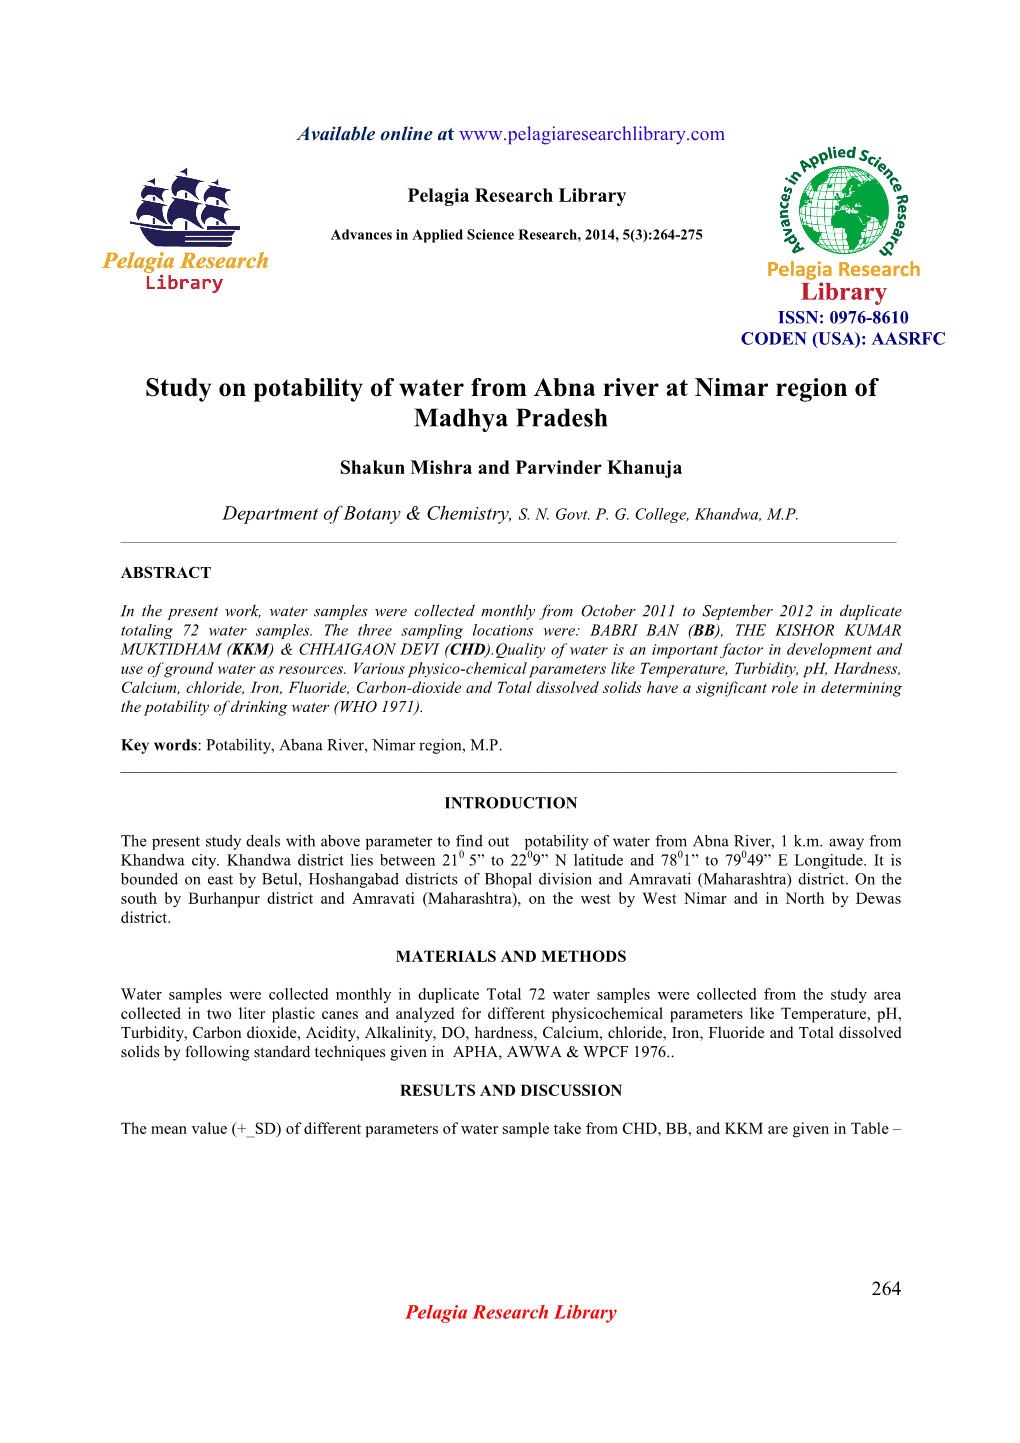 Study on Potability of Water from Abna River at Nimar Region of Madhya Pradesh